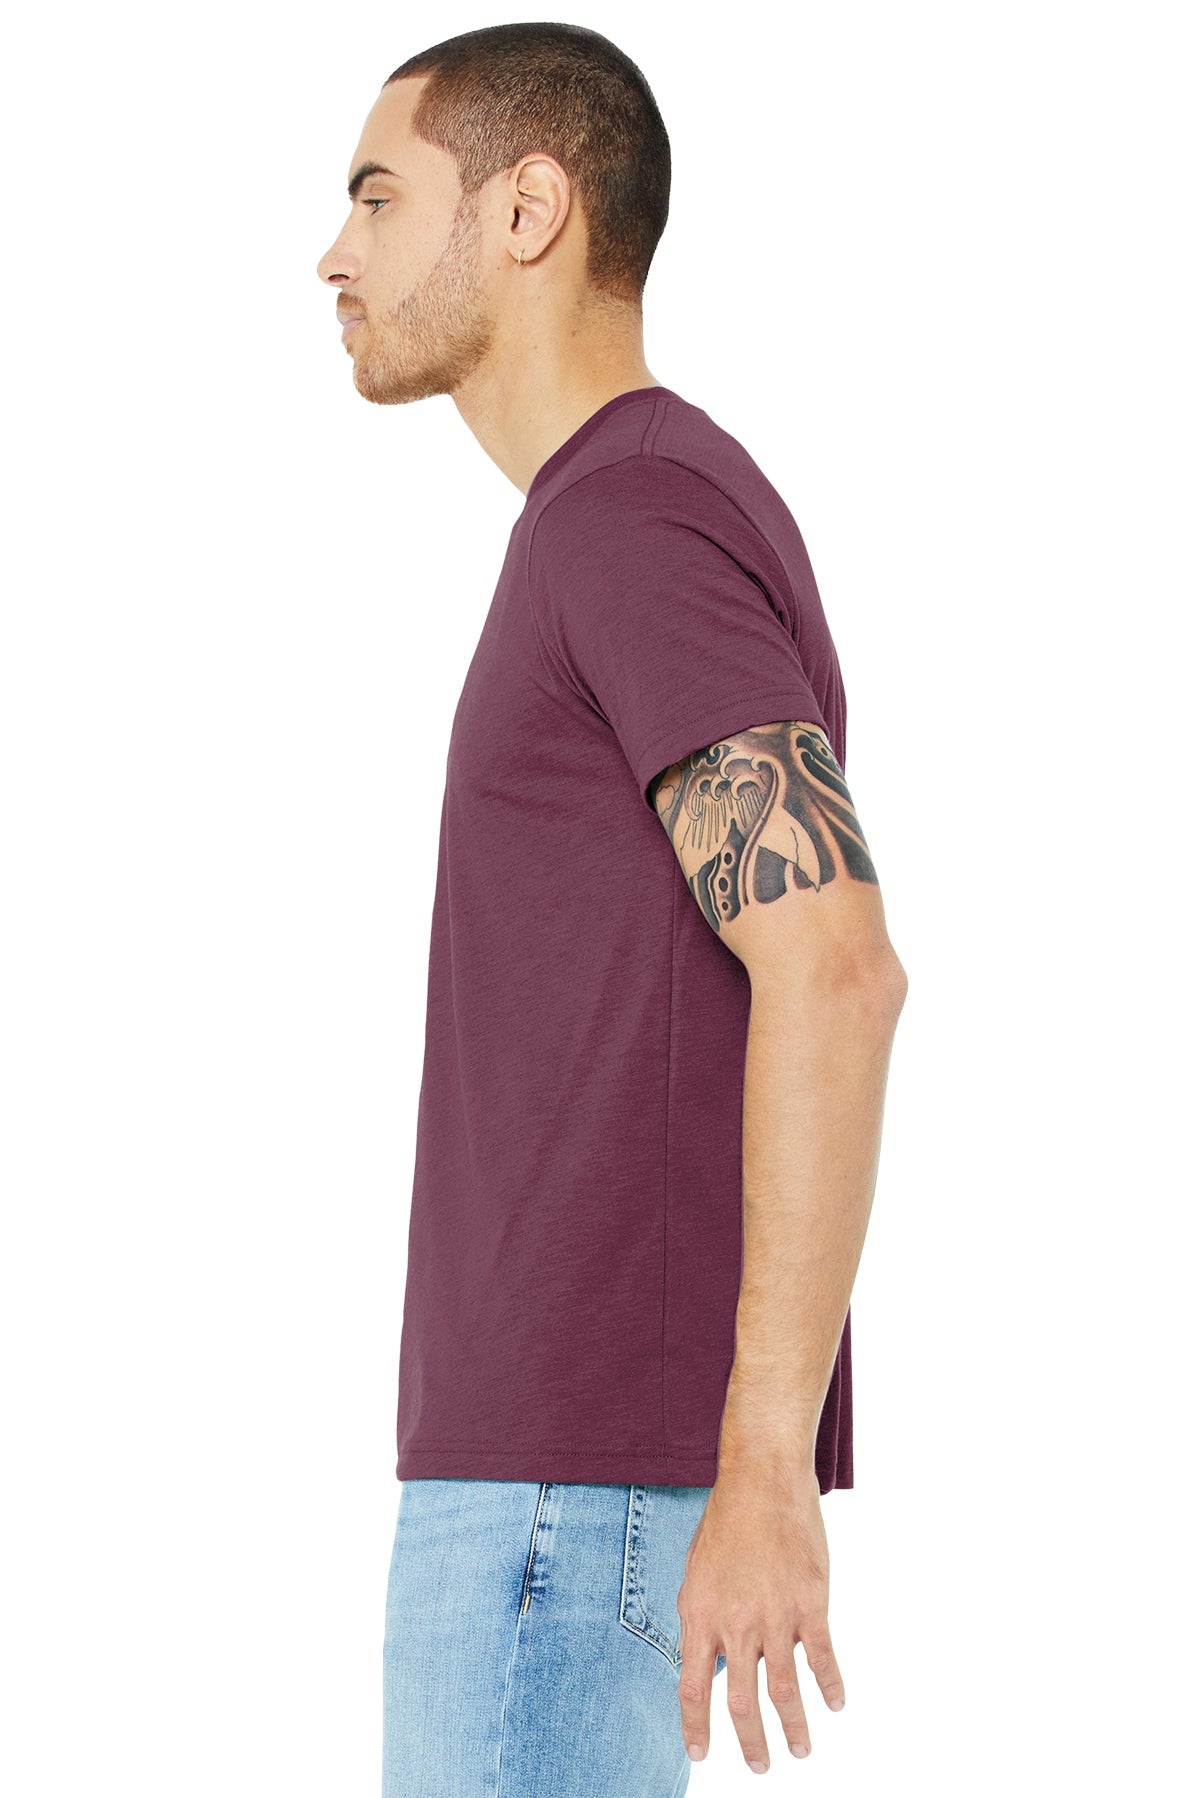 bella + canvas unisex triblend short sleeve t-shirt 3413c maroon triblend